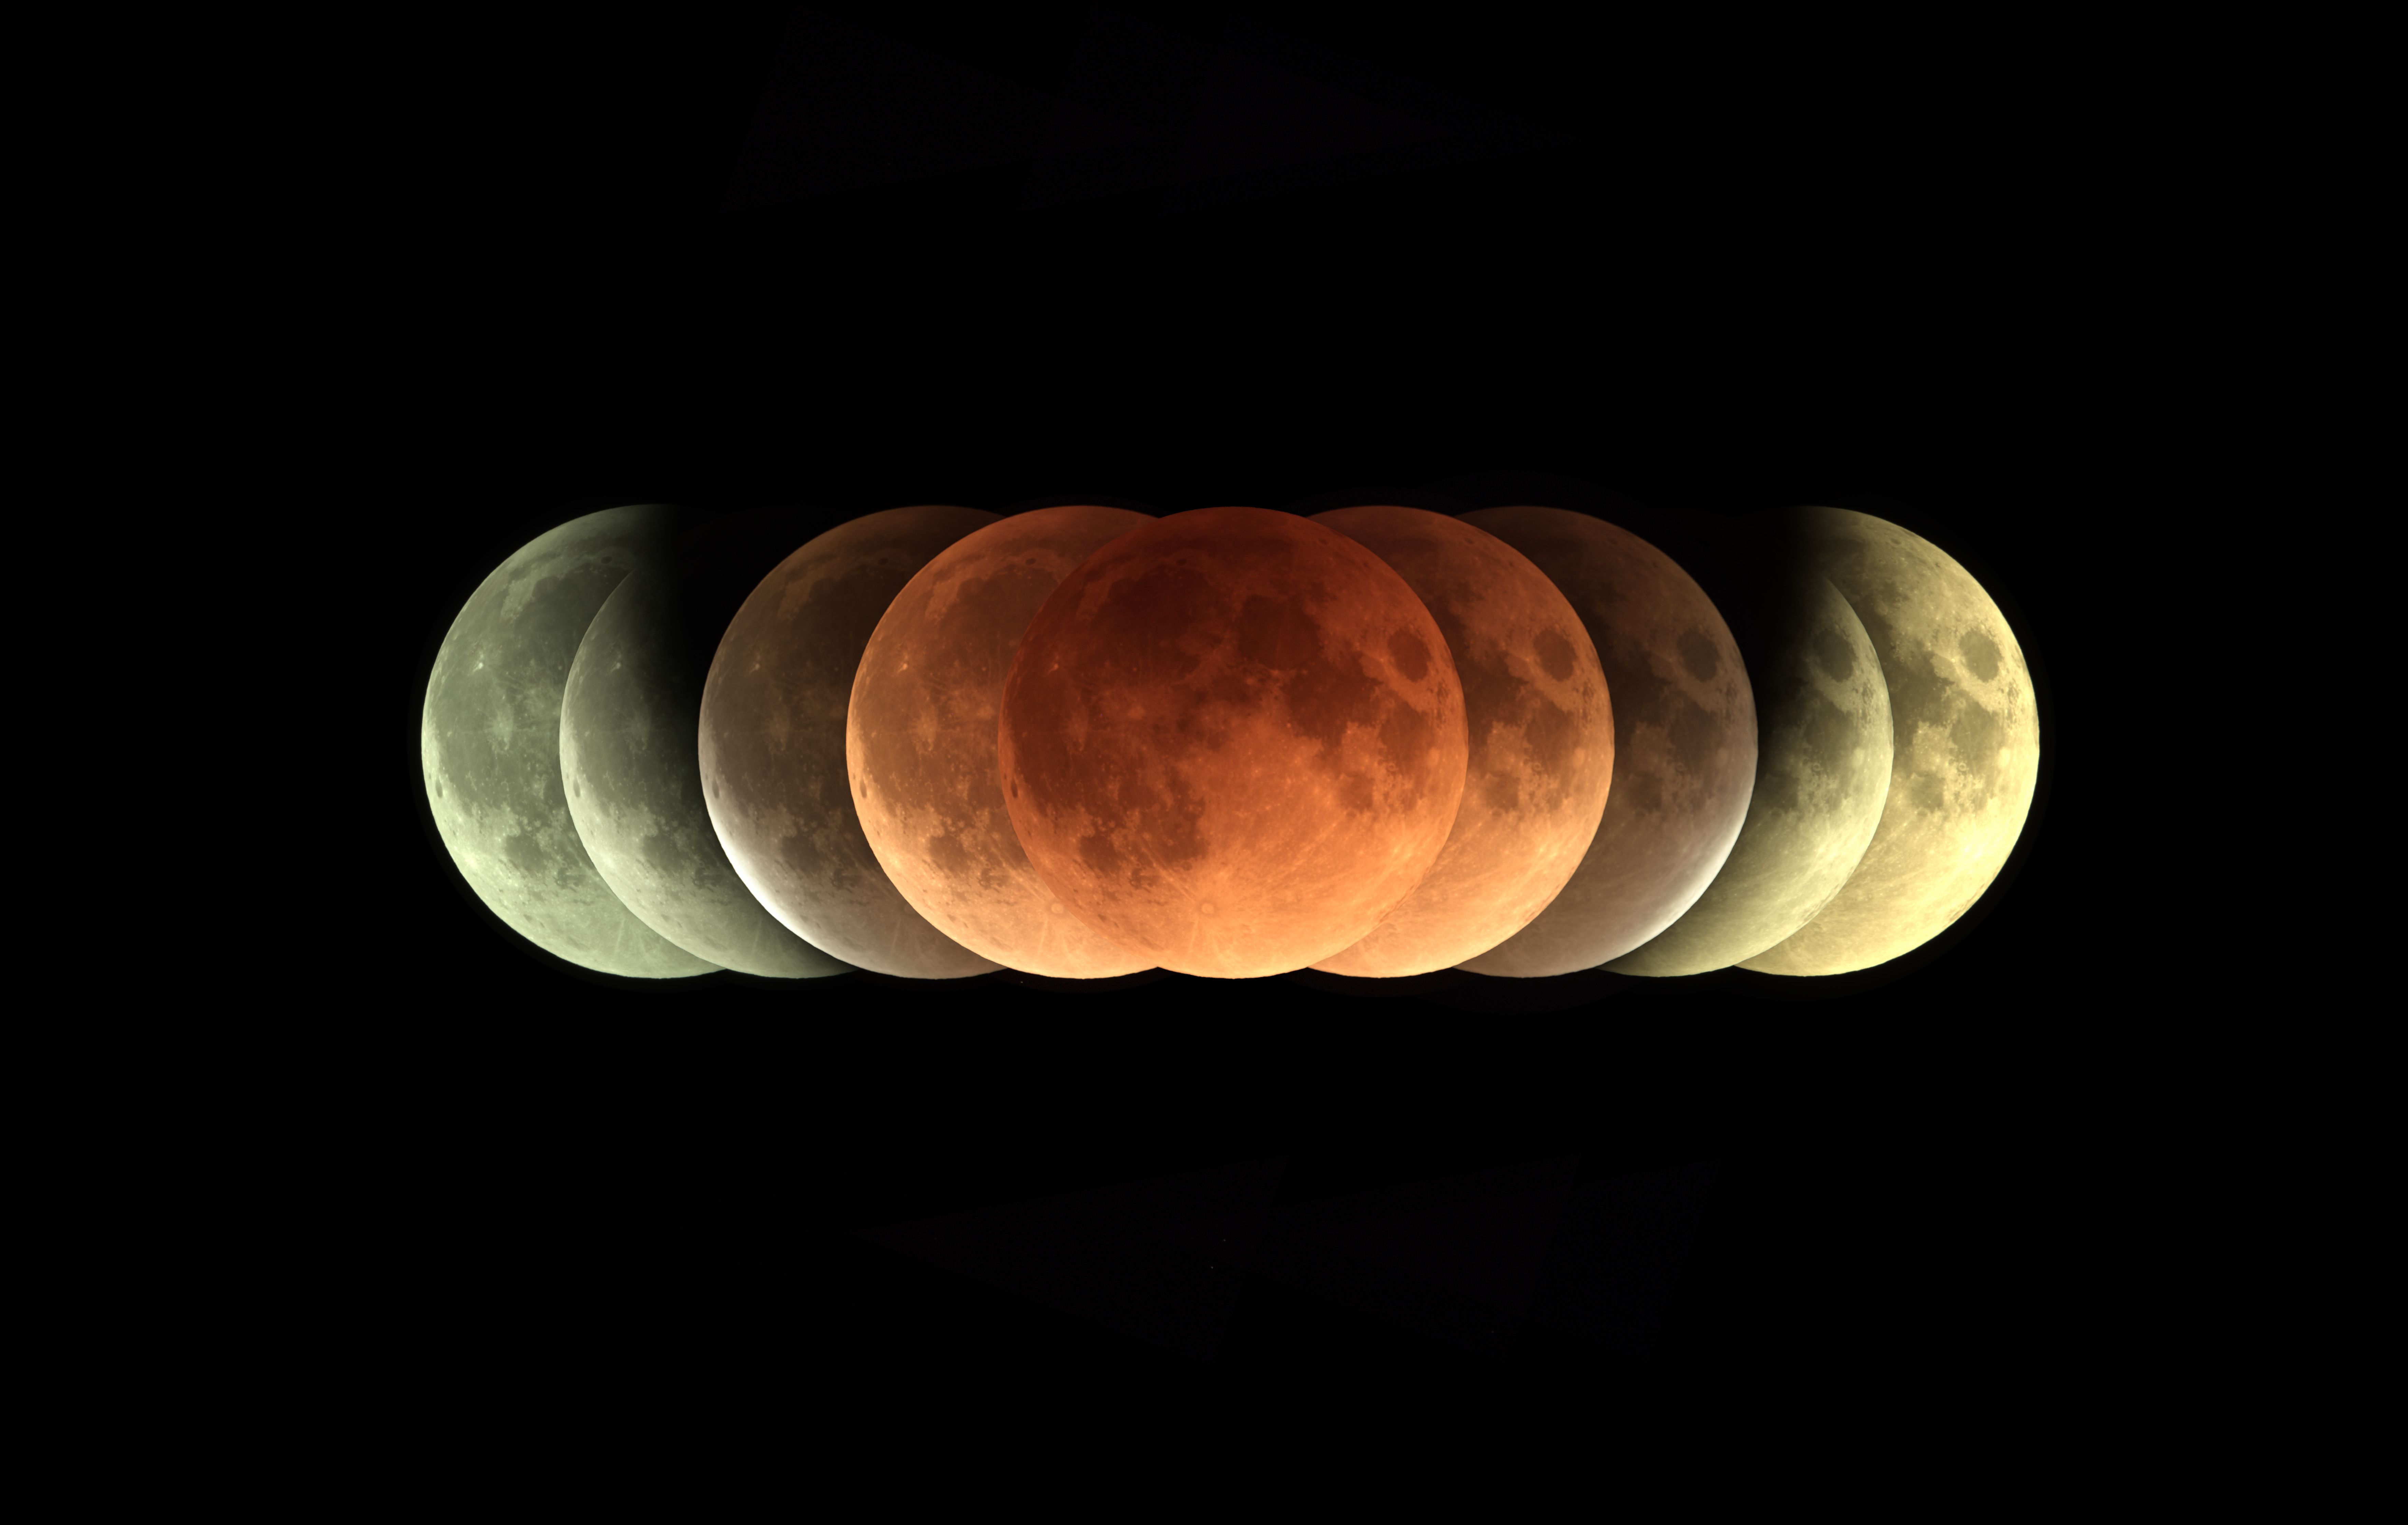 Total lunar eclipse photography: Shutterstock shooters share their secrets. Digital Camera World